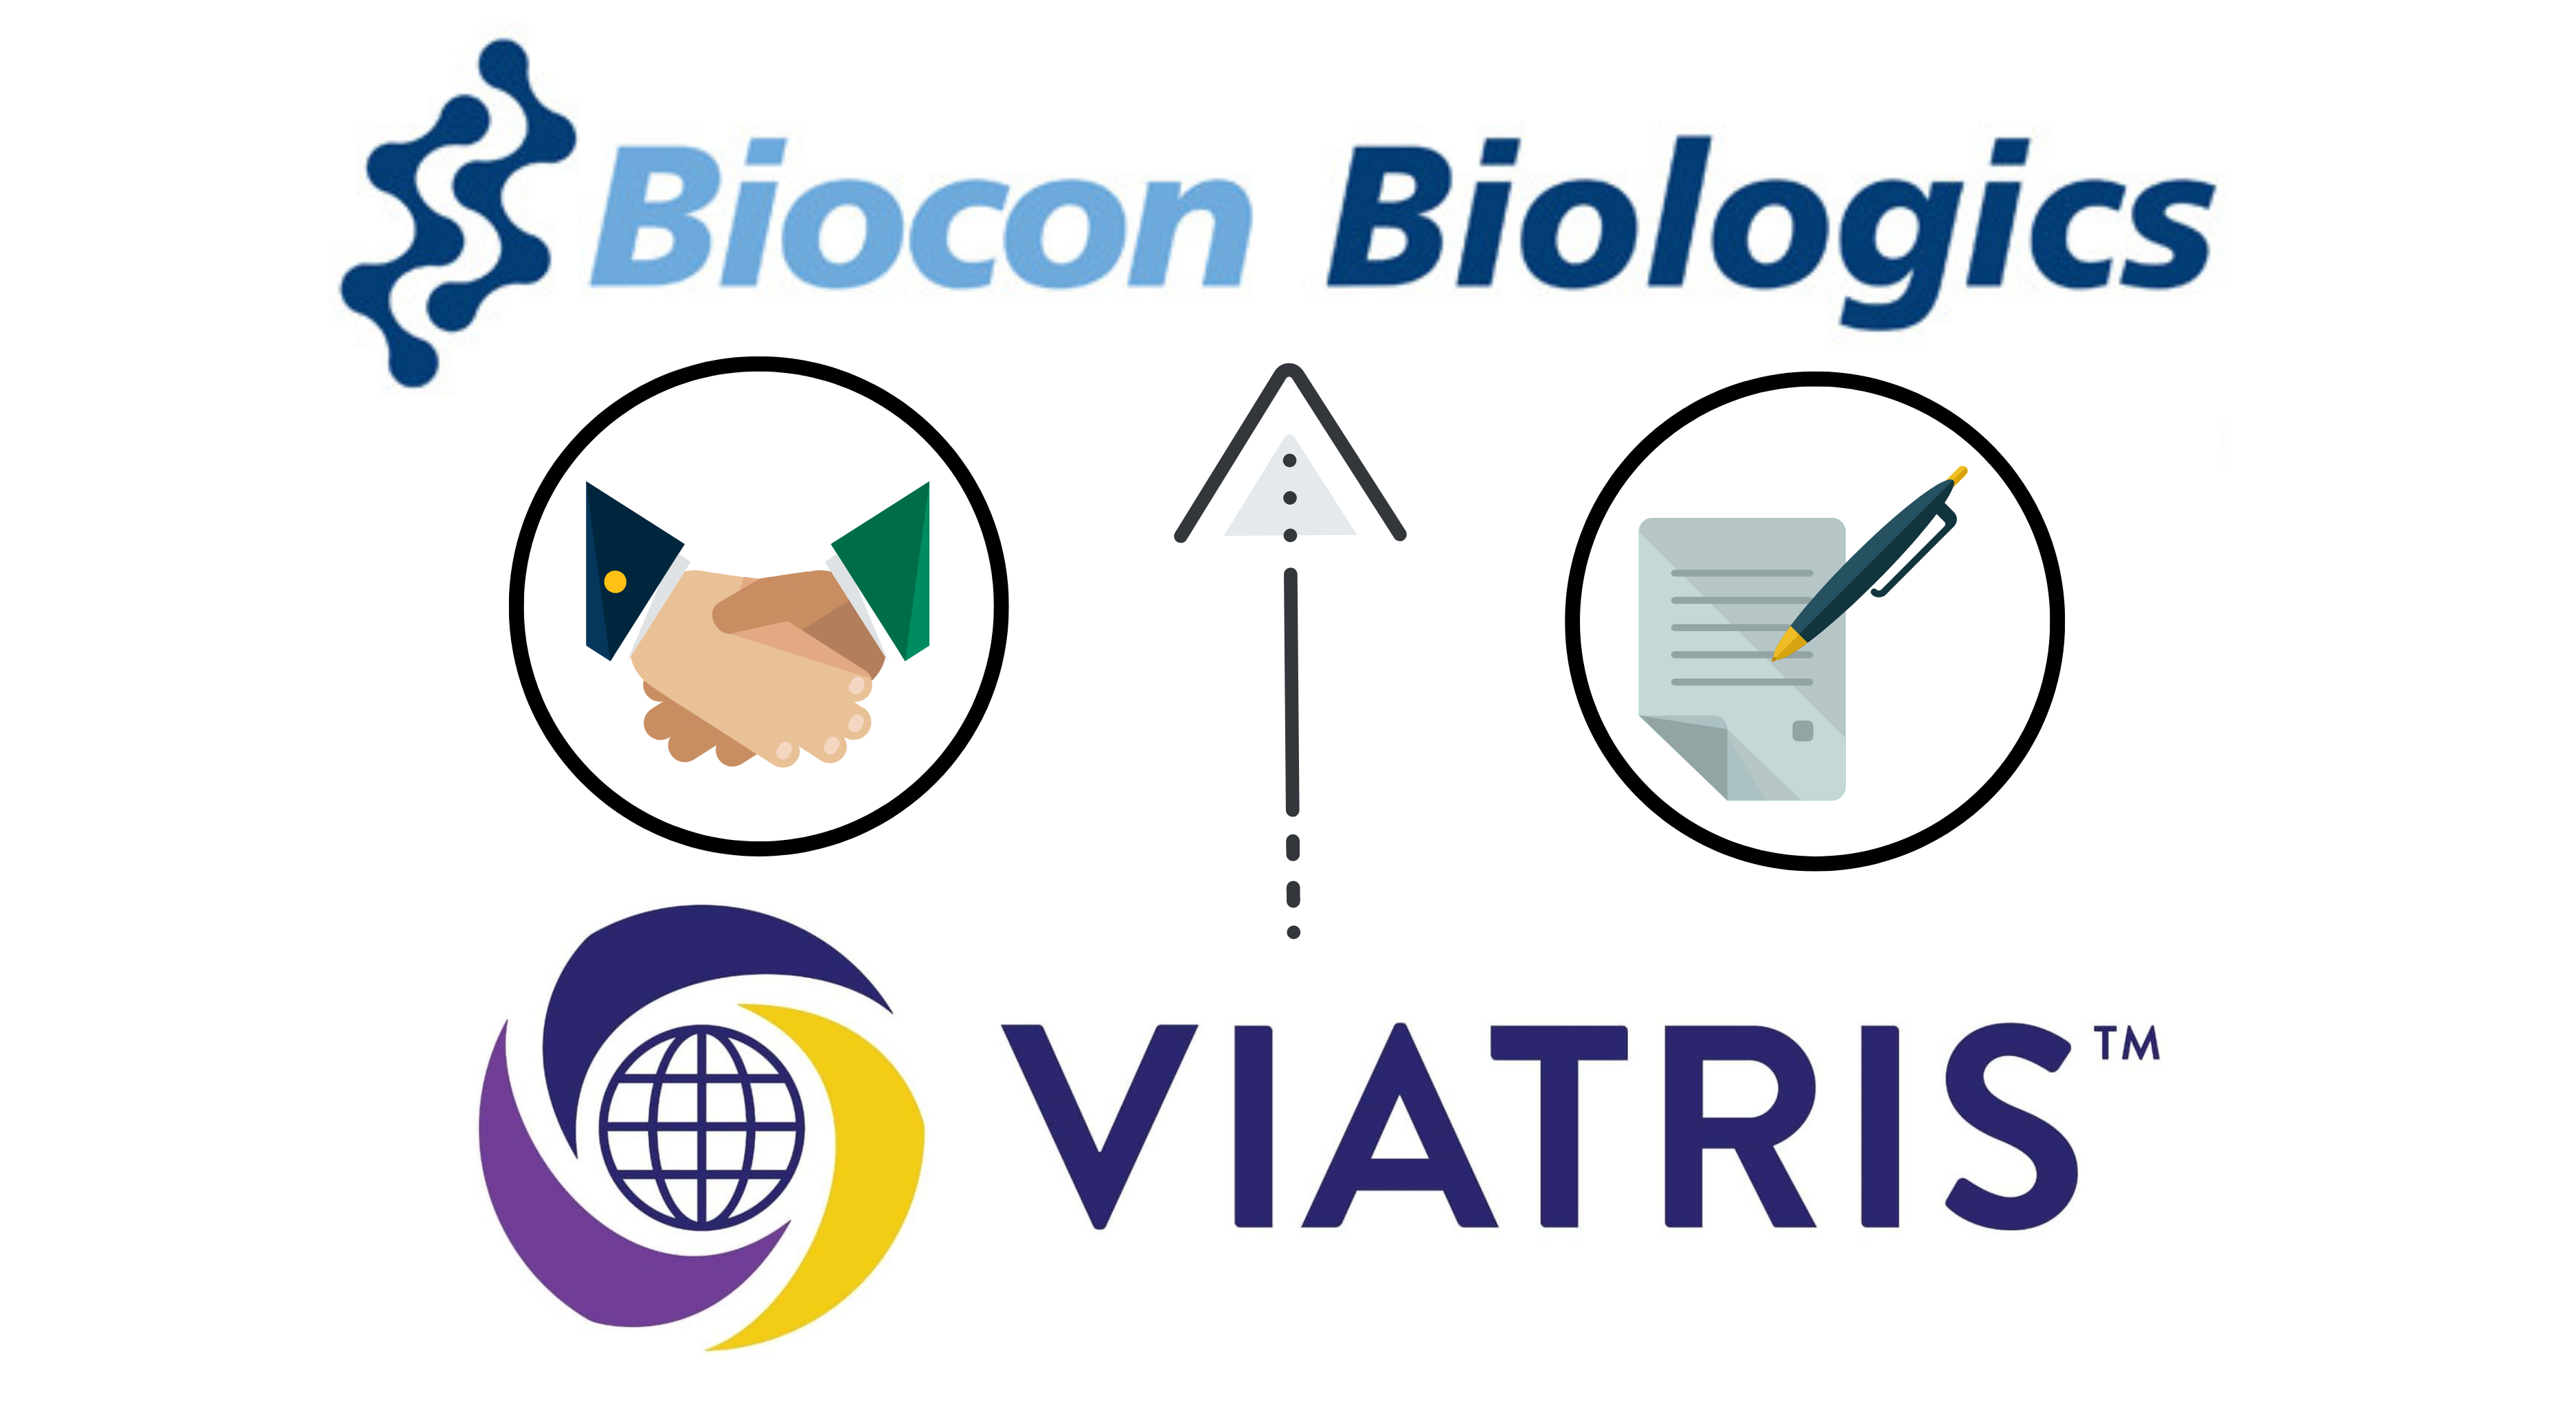 Biocon Biologics and Viatris logos